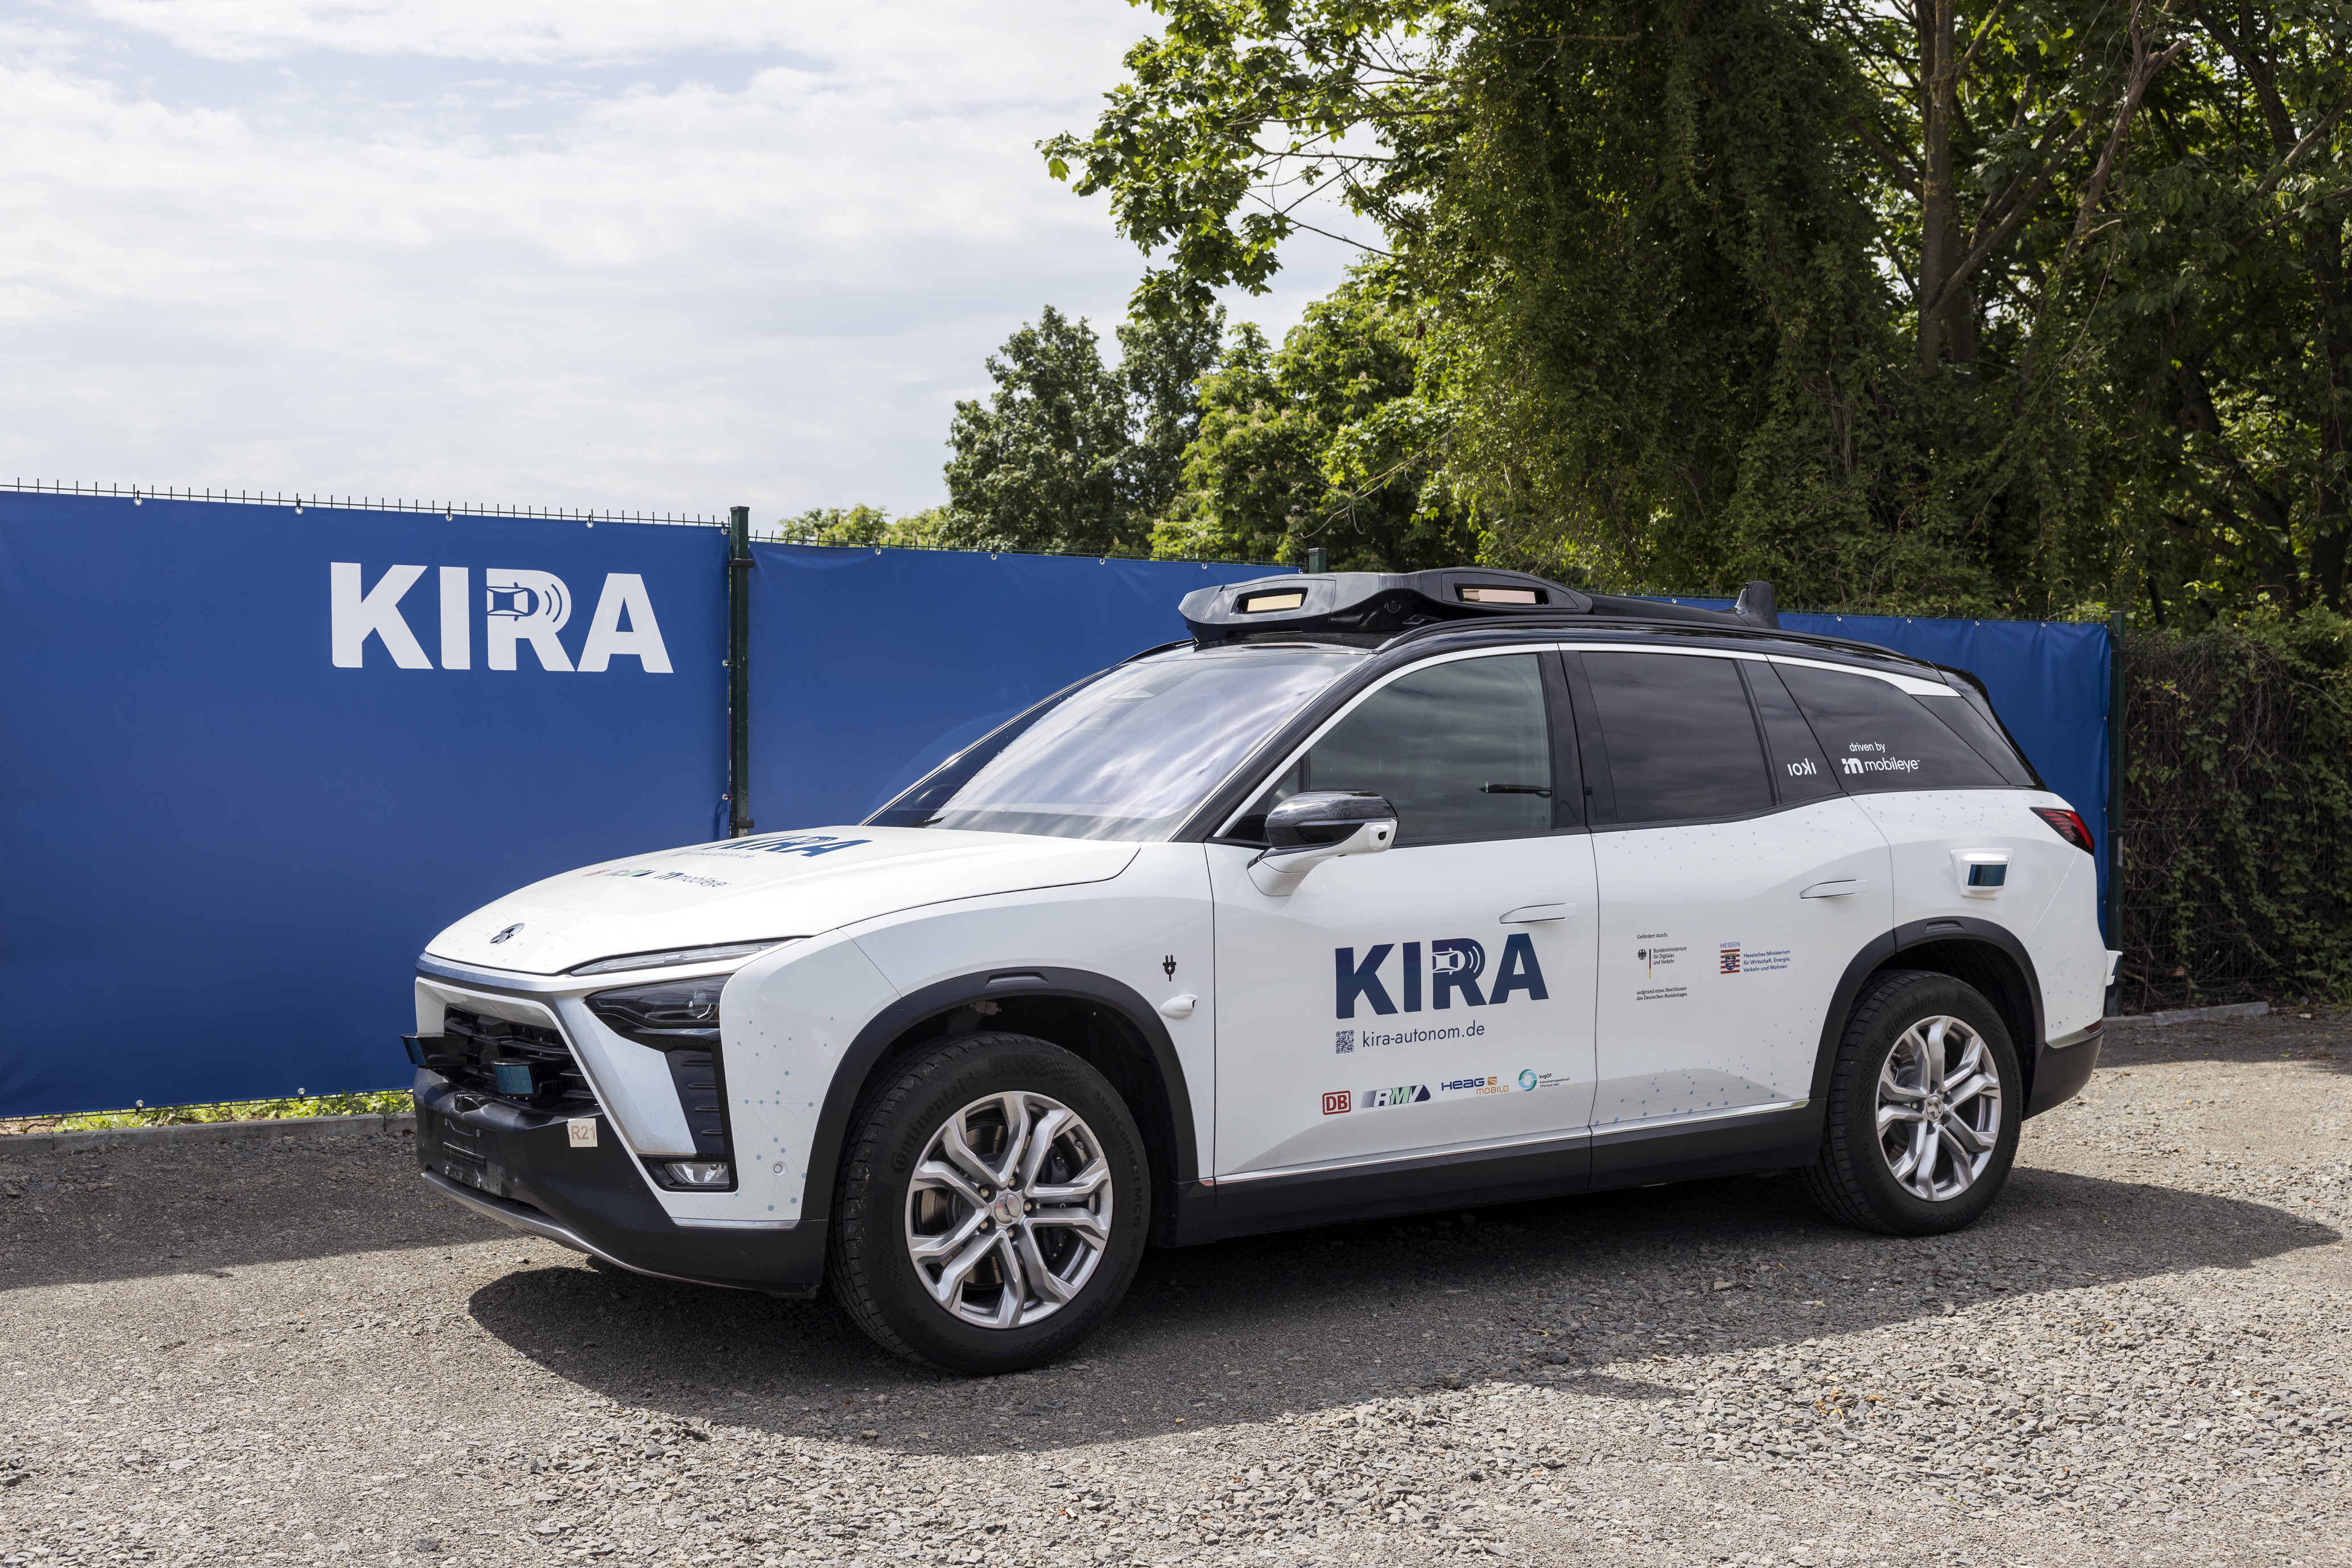 KIRA starts with autonomous vehicles for public transport